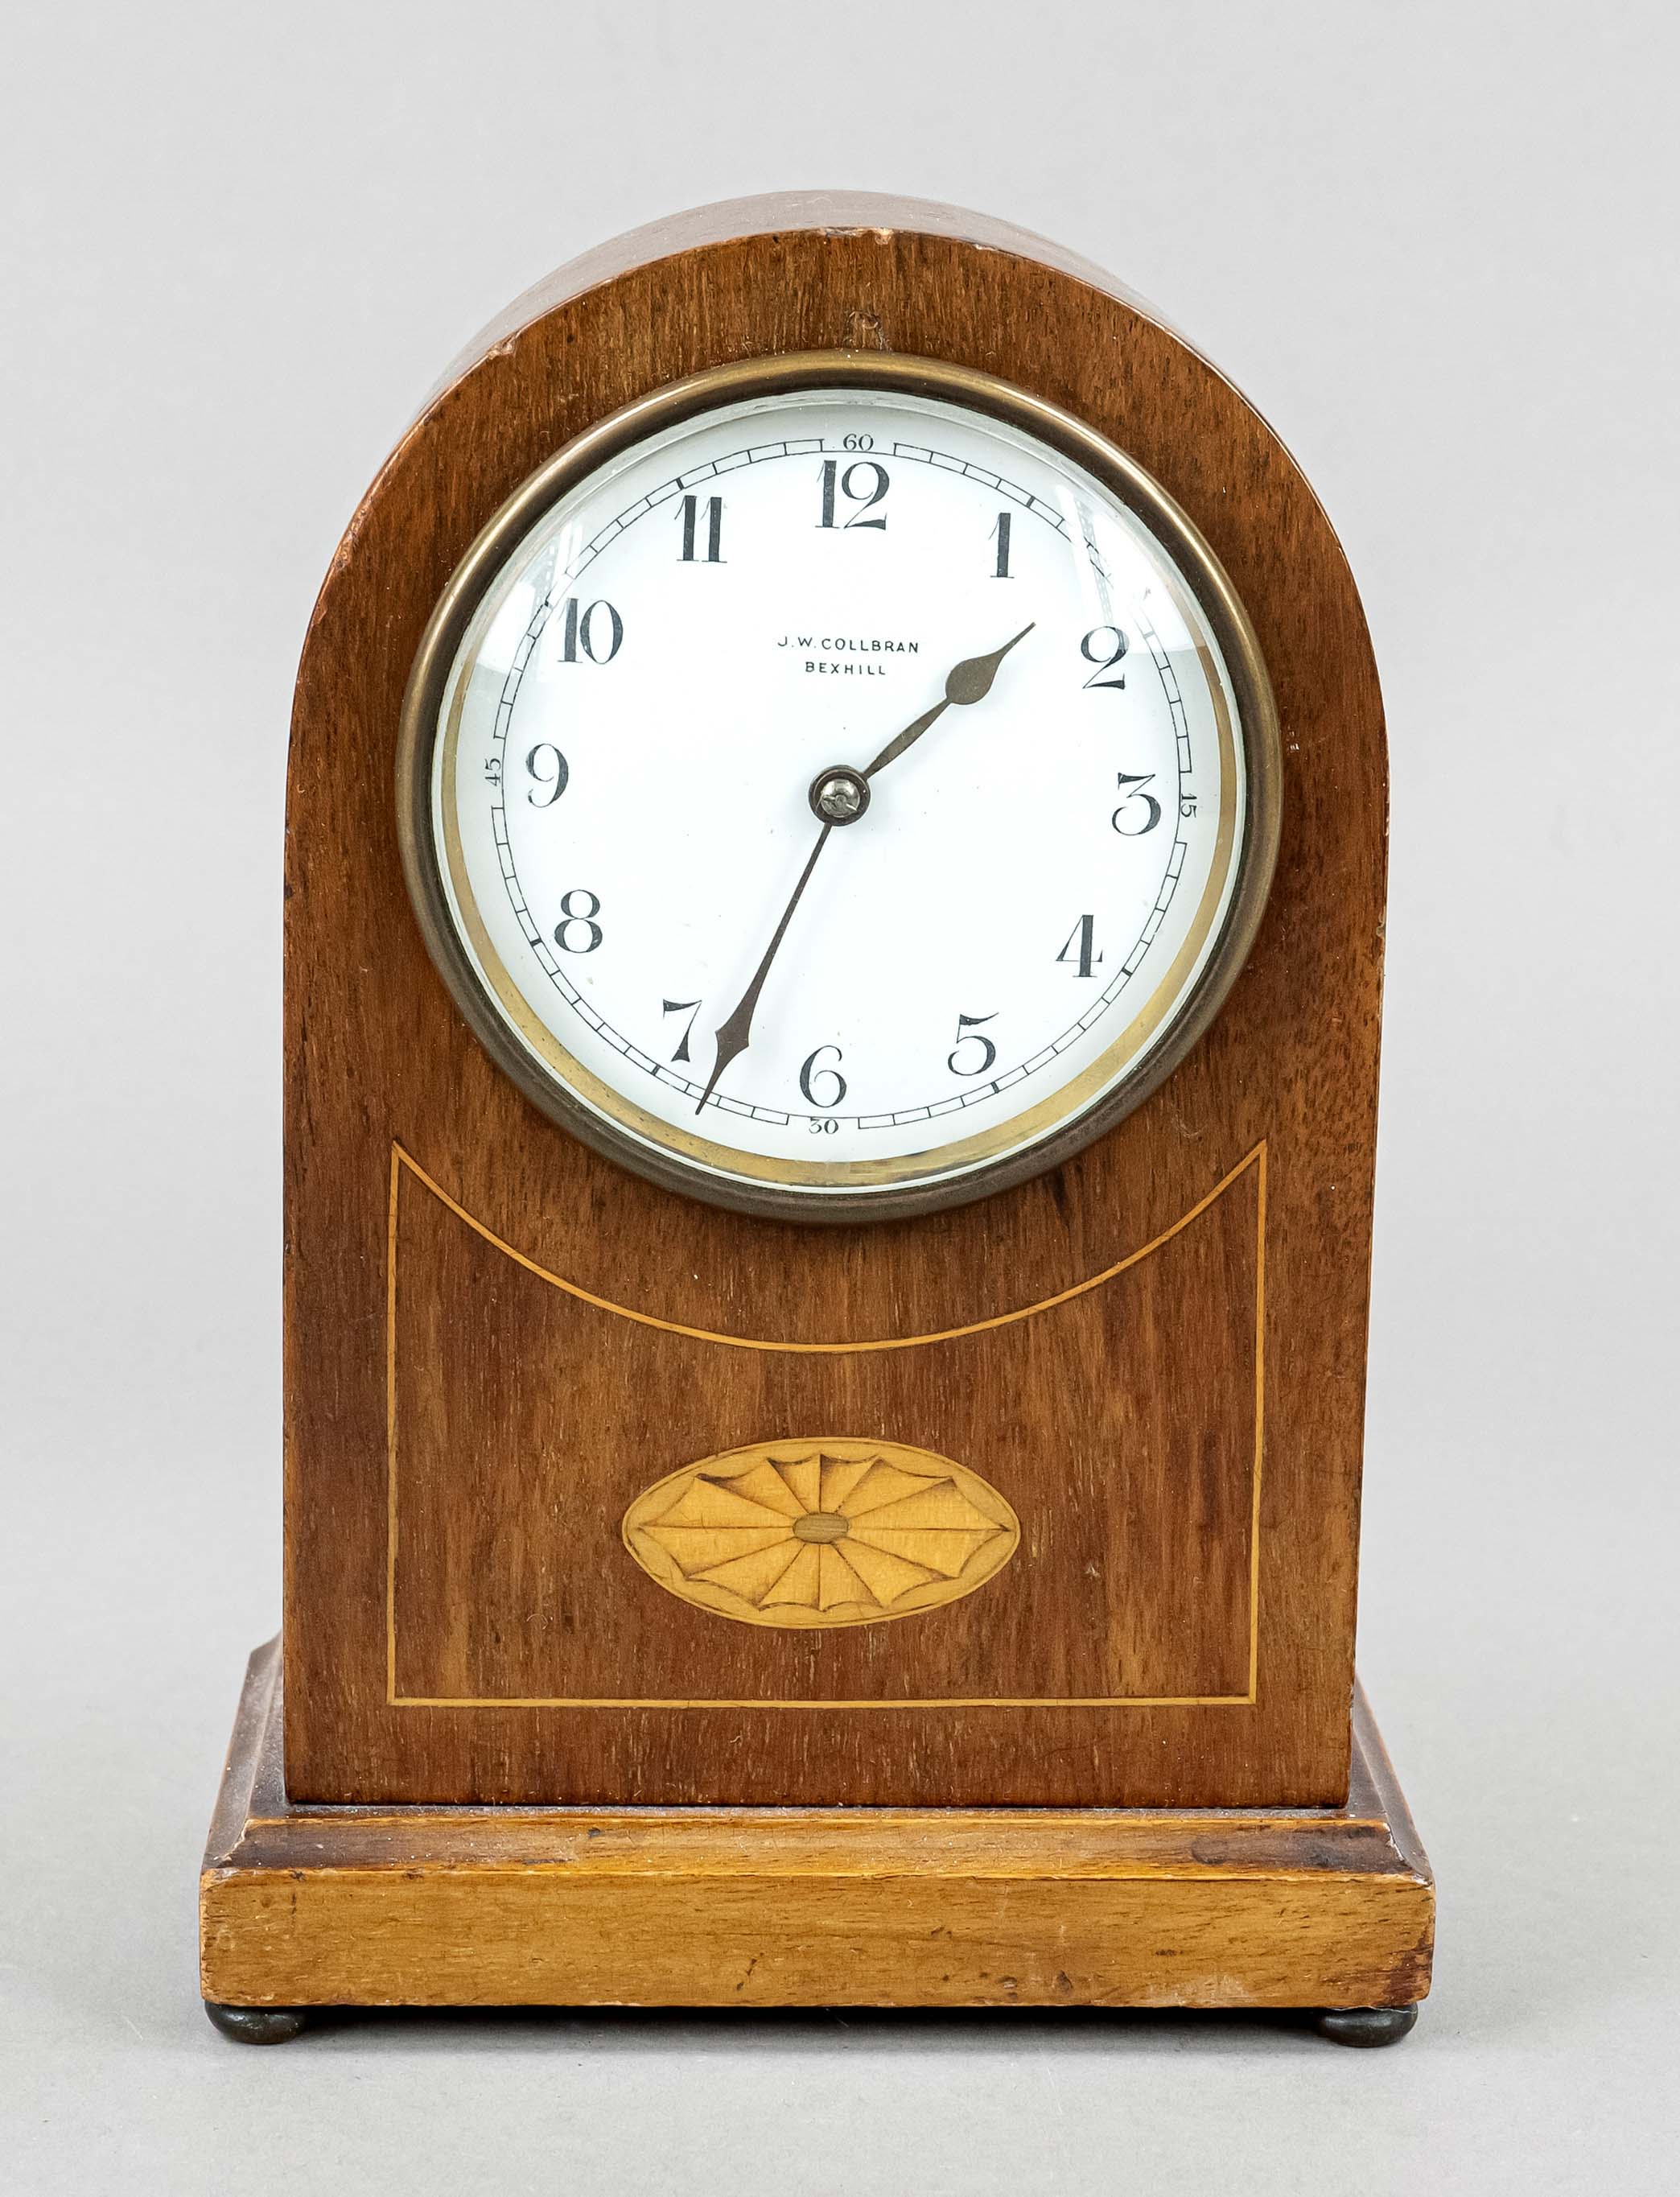 English table clock mahogany wood, marked J.W. Collbran - Bexhill, circa 1900, round head, base on